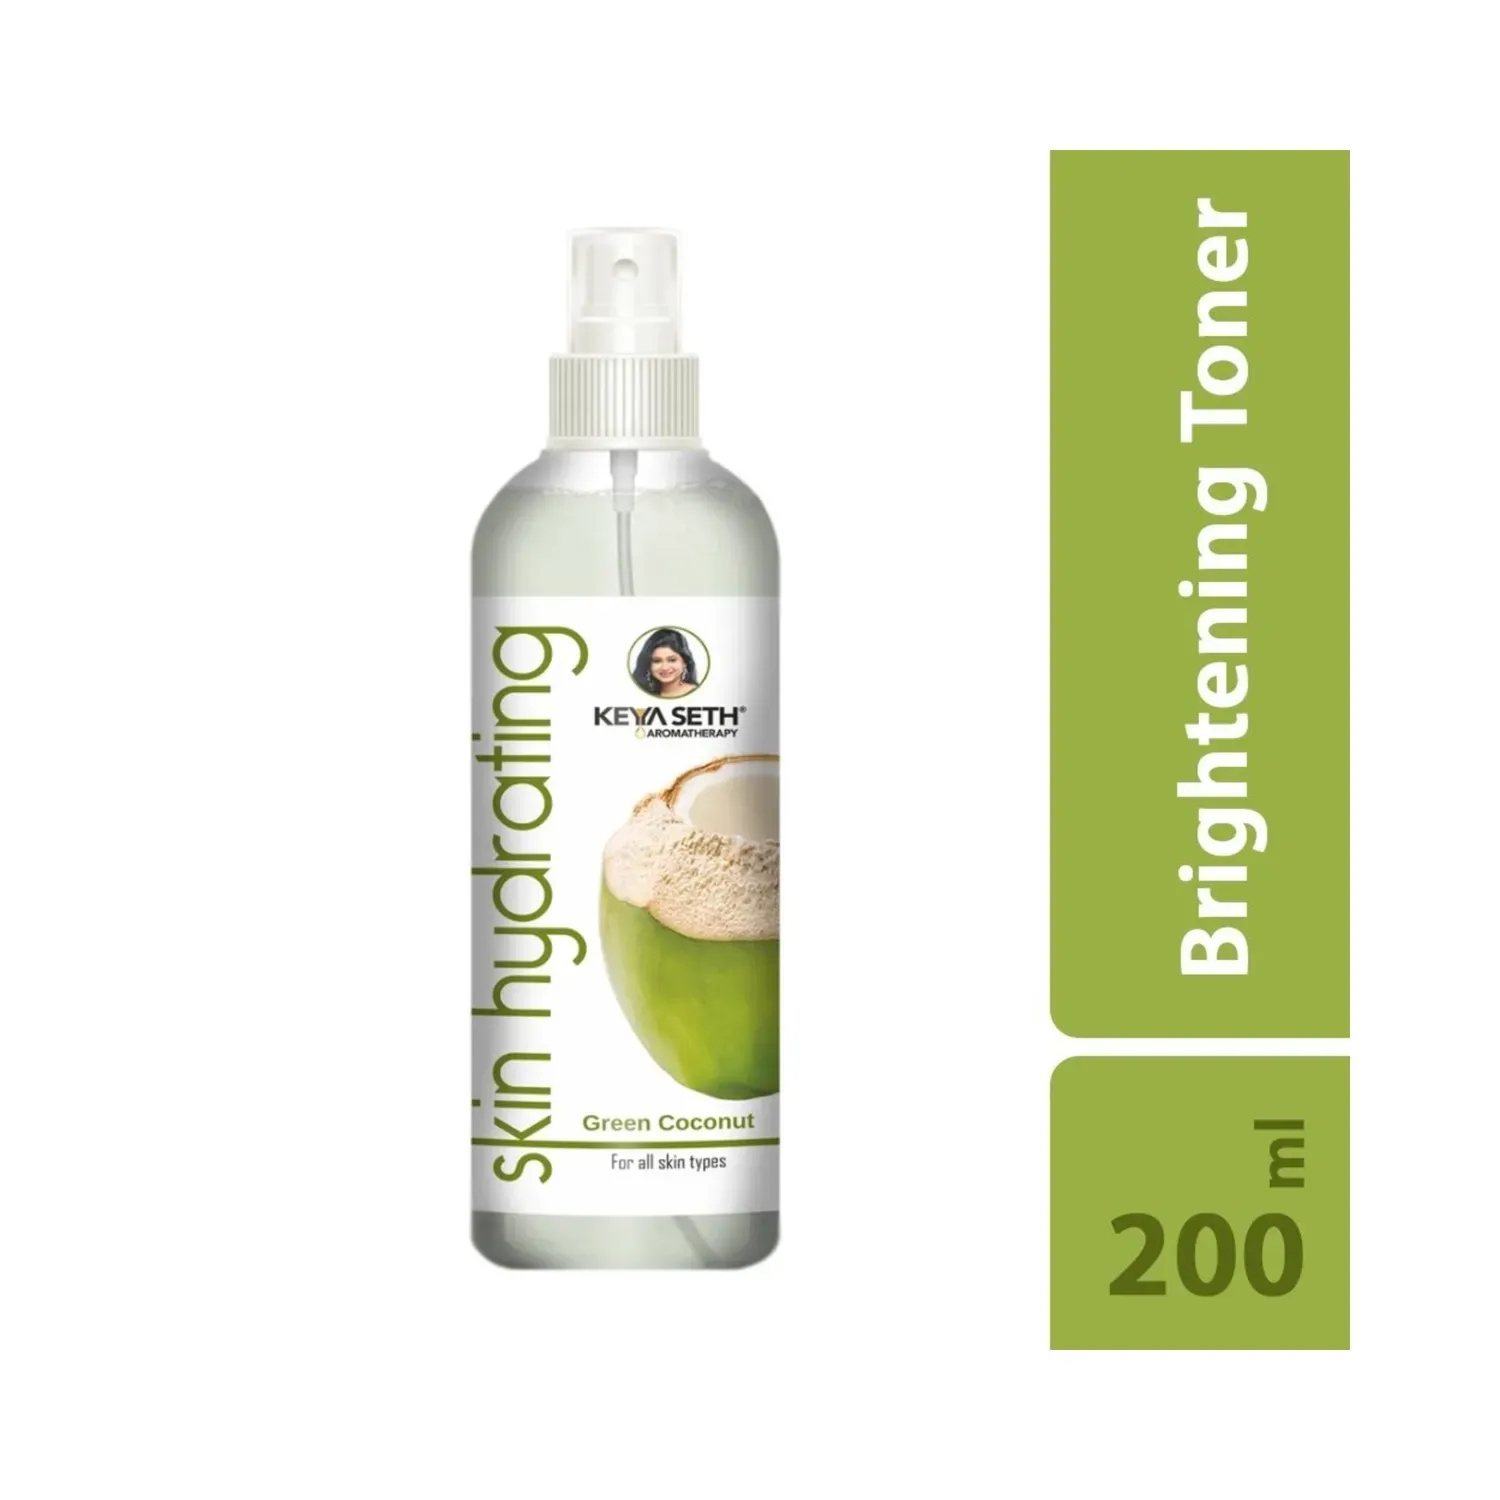 Keya Seth Aromatherapy | Keya Seth Aromatherapy Skin Hydrating Green Coconut Toner (200ml)